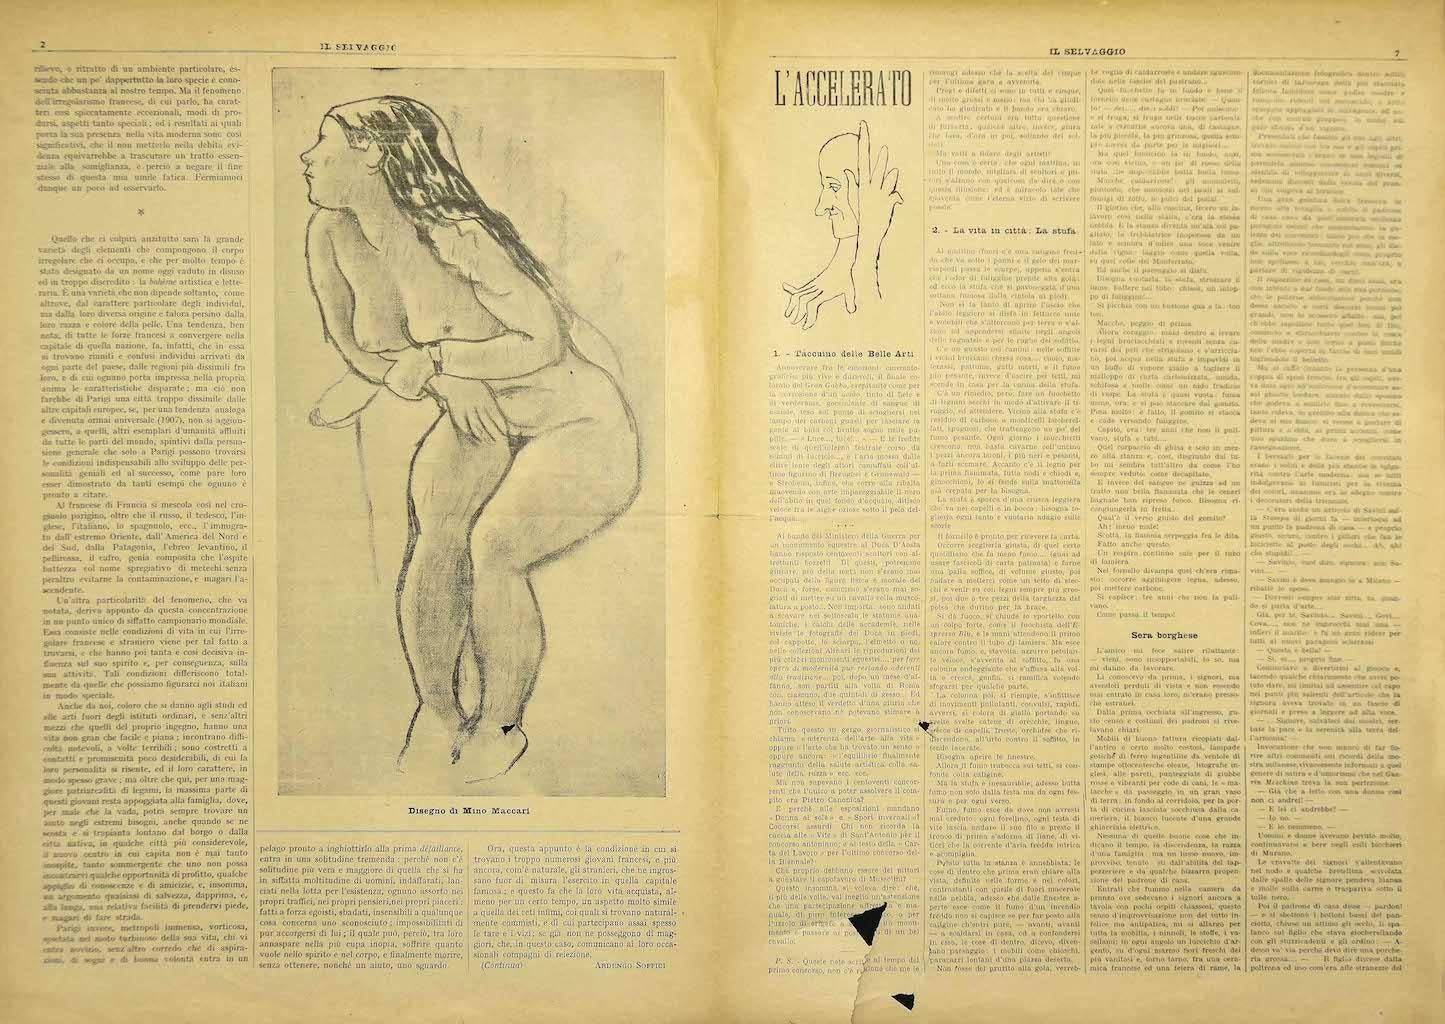 Il Selvaggio #1 - Art Magazine with Engravings by Mino Maccari - 1934 For Sale 1